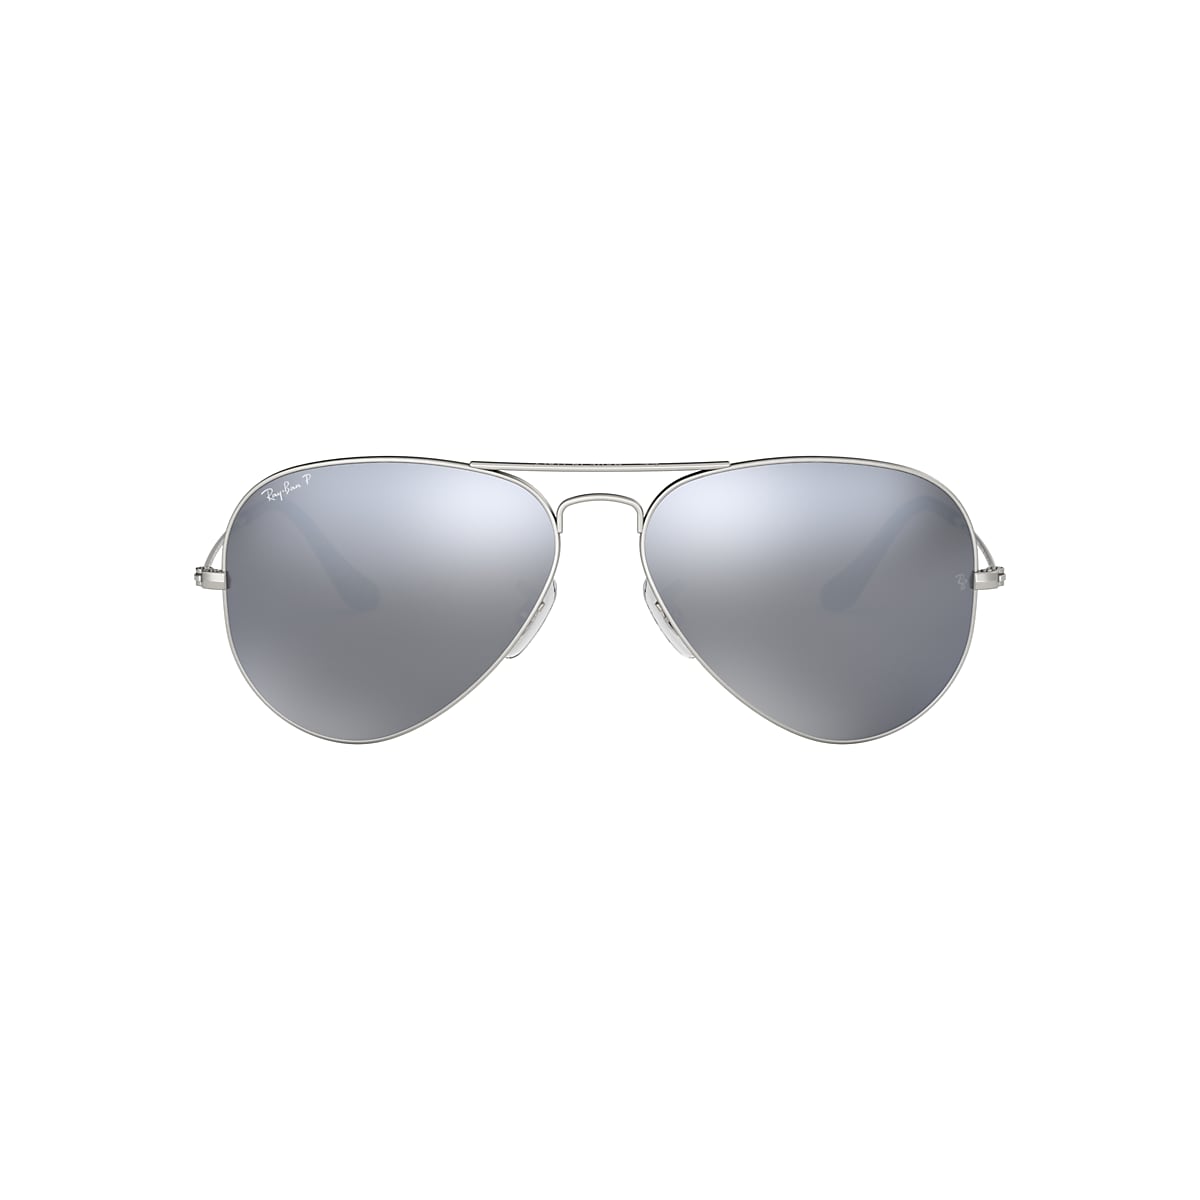 RB3025 Aviator Mirror 58 Grey & Silver Polarized Sunglasses | Sunglass Hut Canada